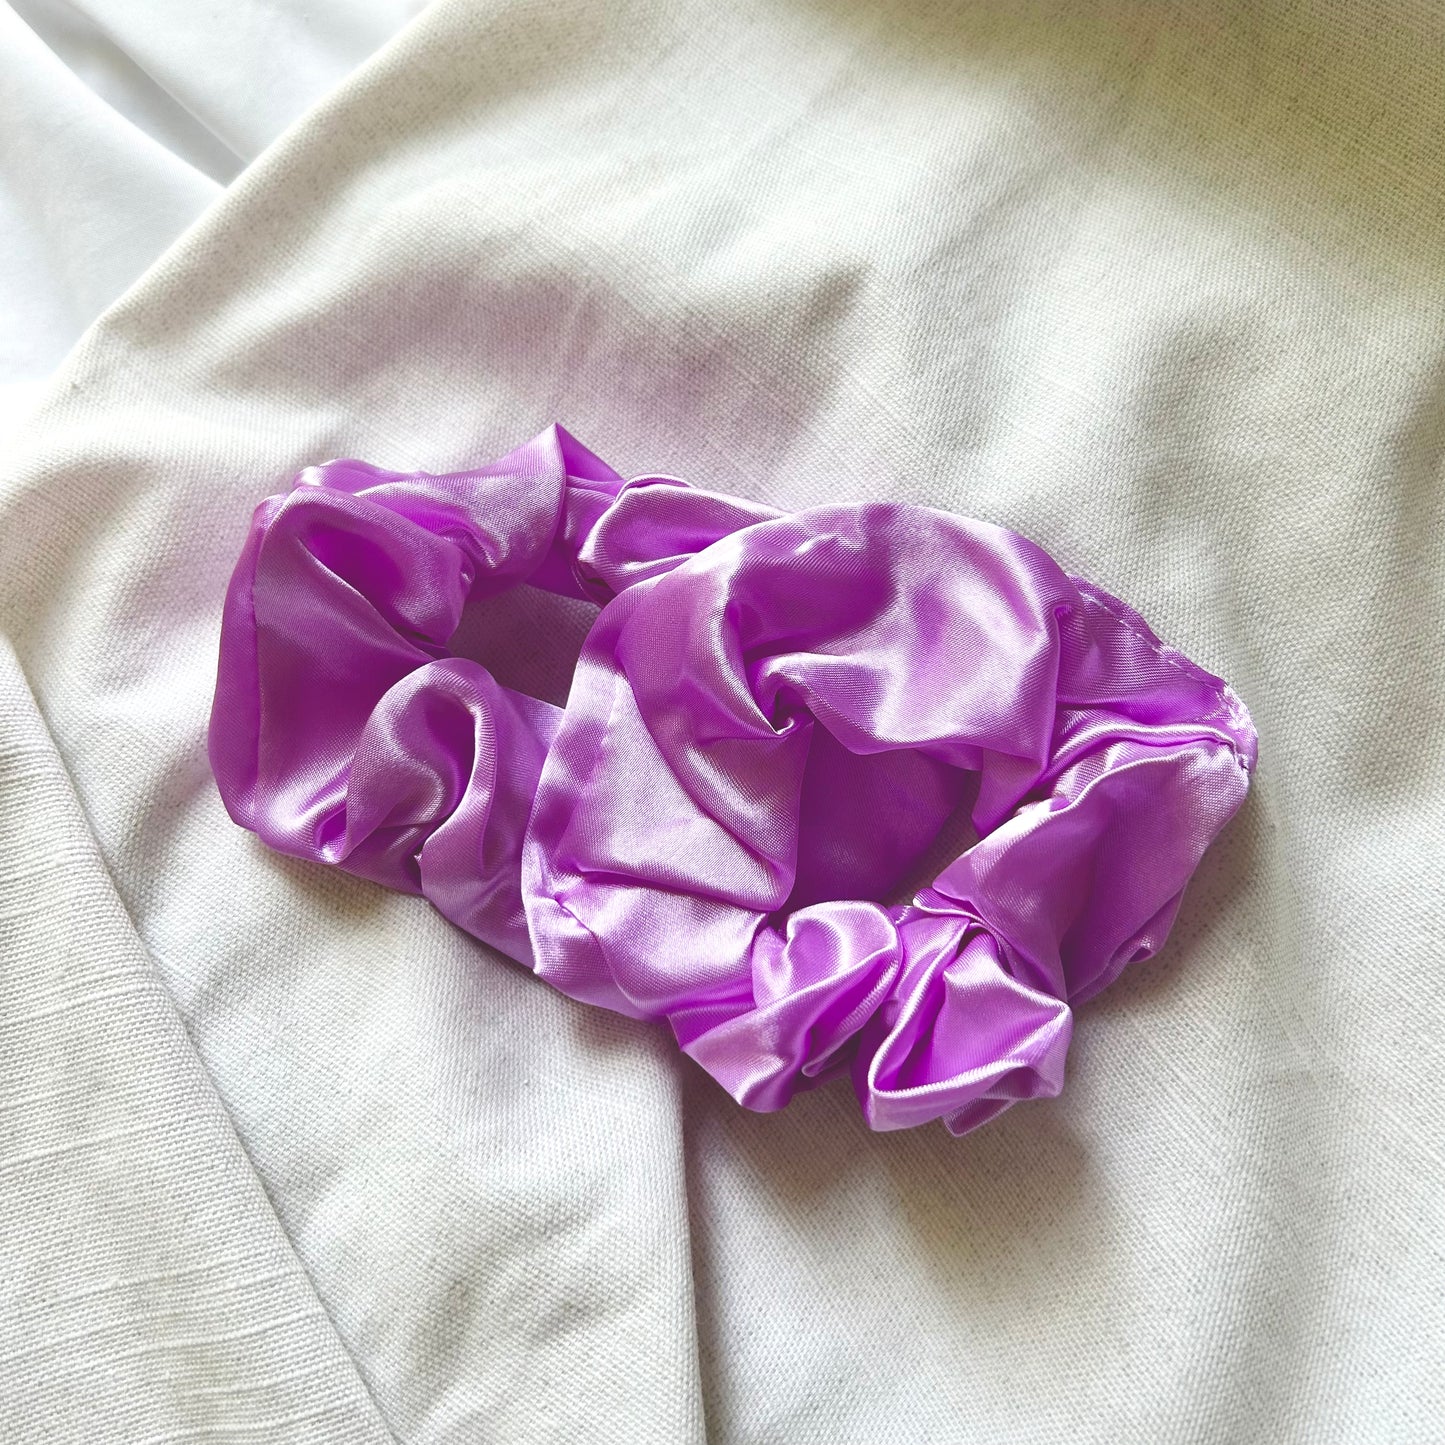 Silk satin scrunchies